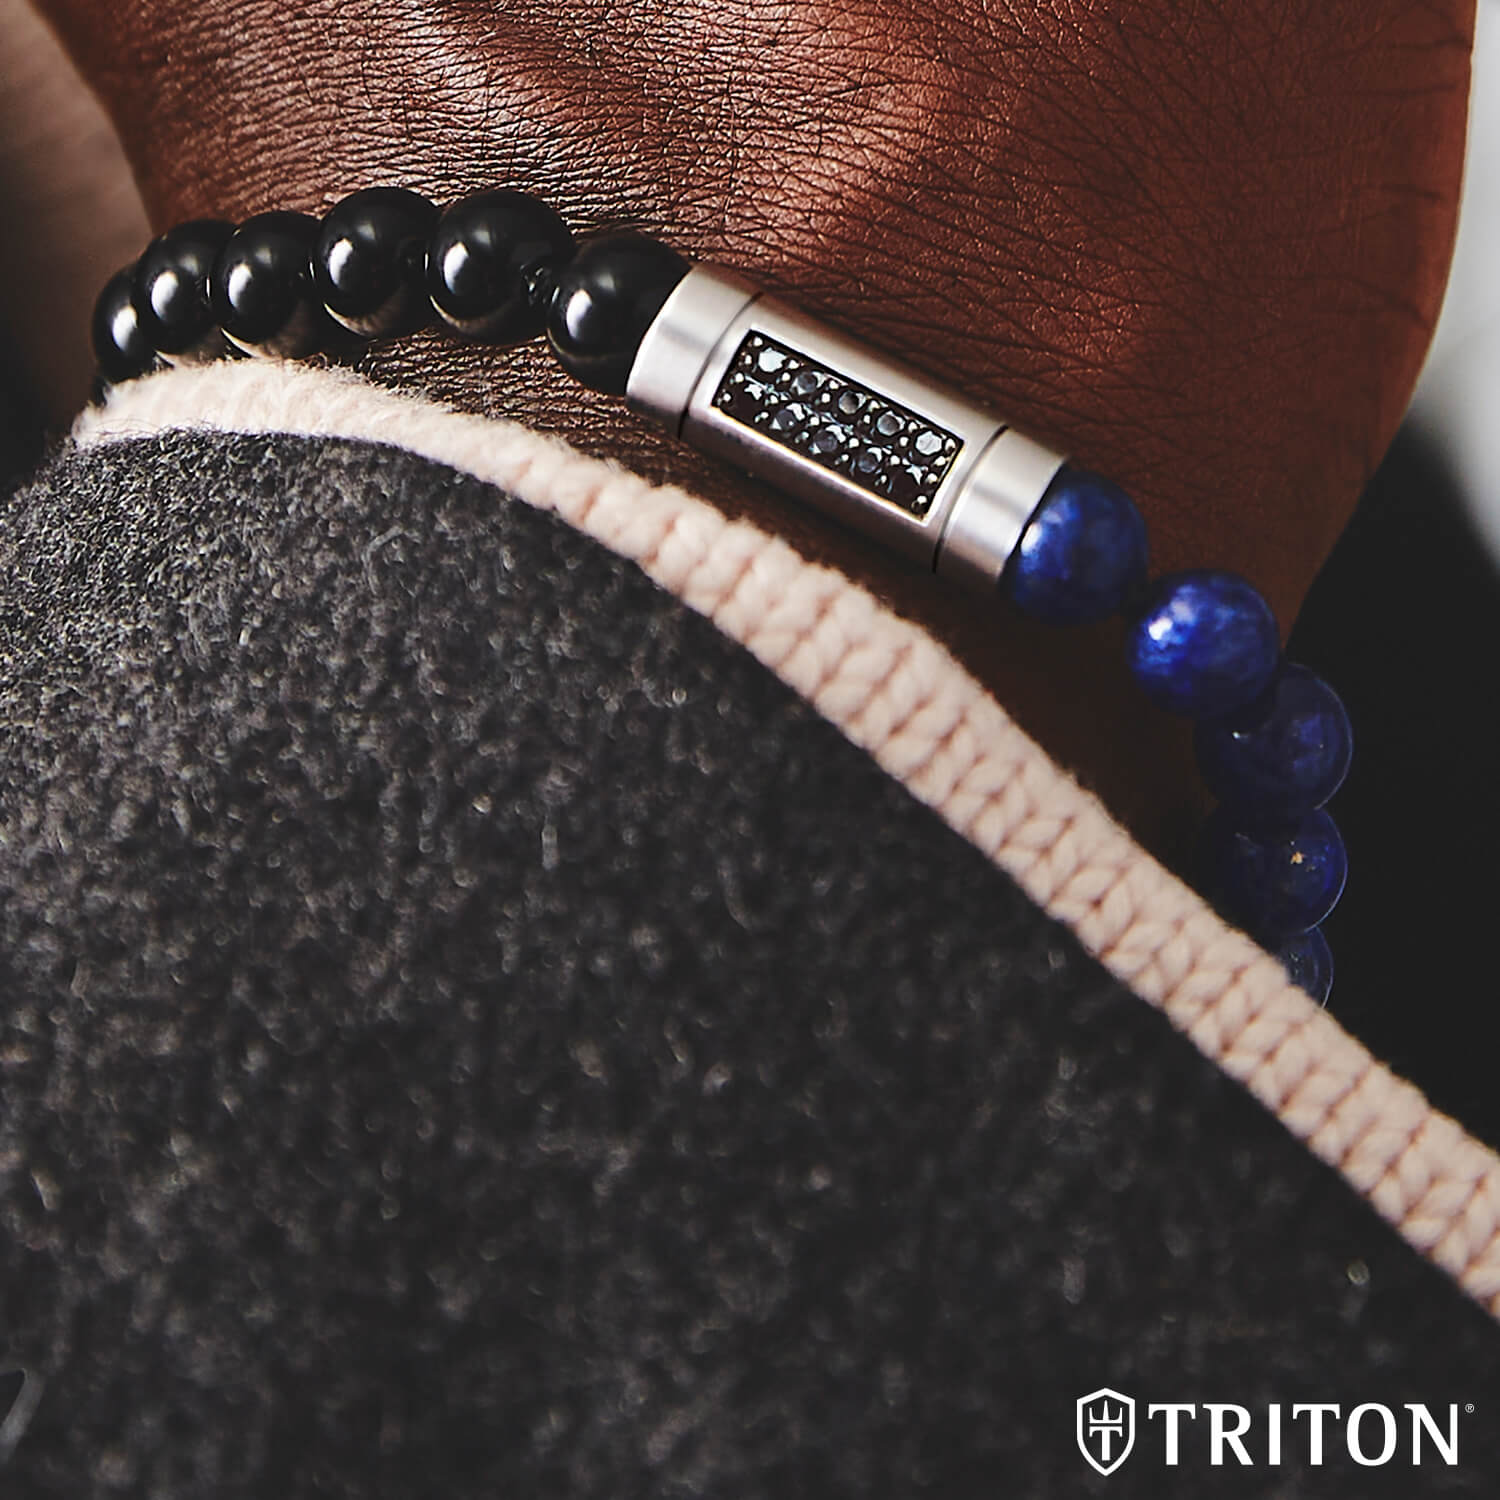 T89 Double-Wrap Braided Leather Bracelet